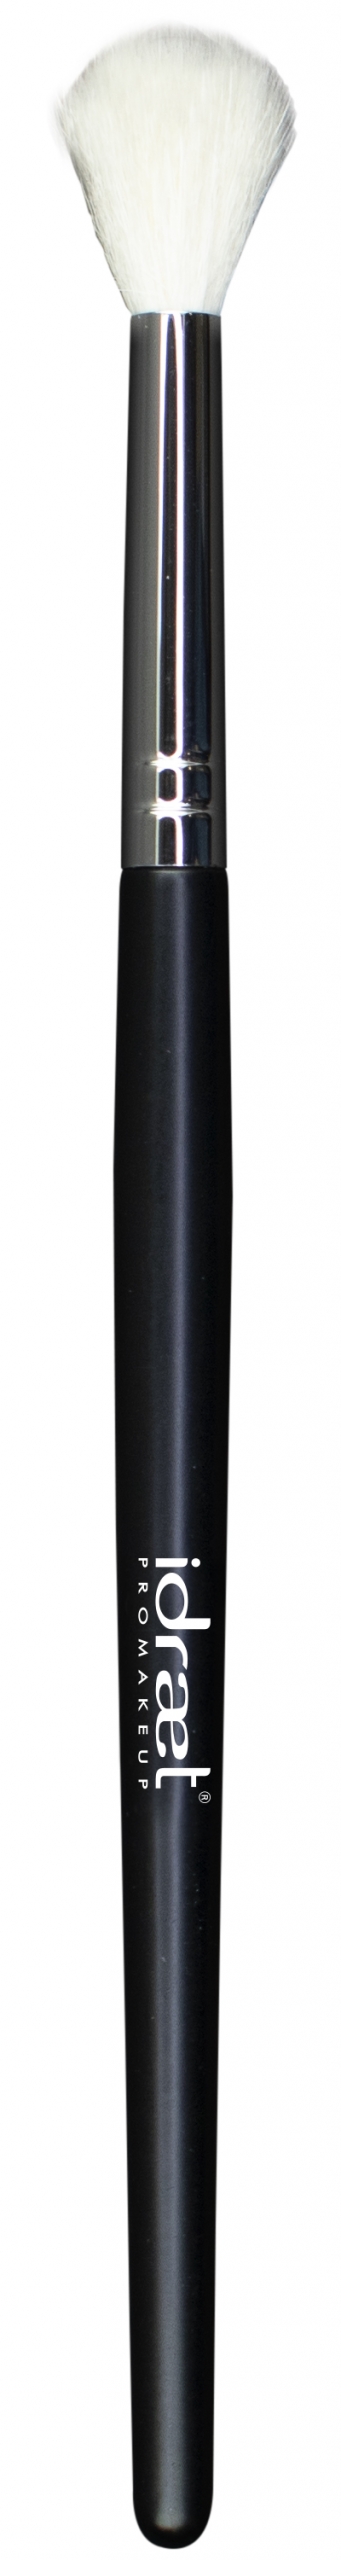 IDRAET - Pincel Blender Grande - SP60 Large Eye Blender Brush